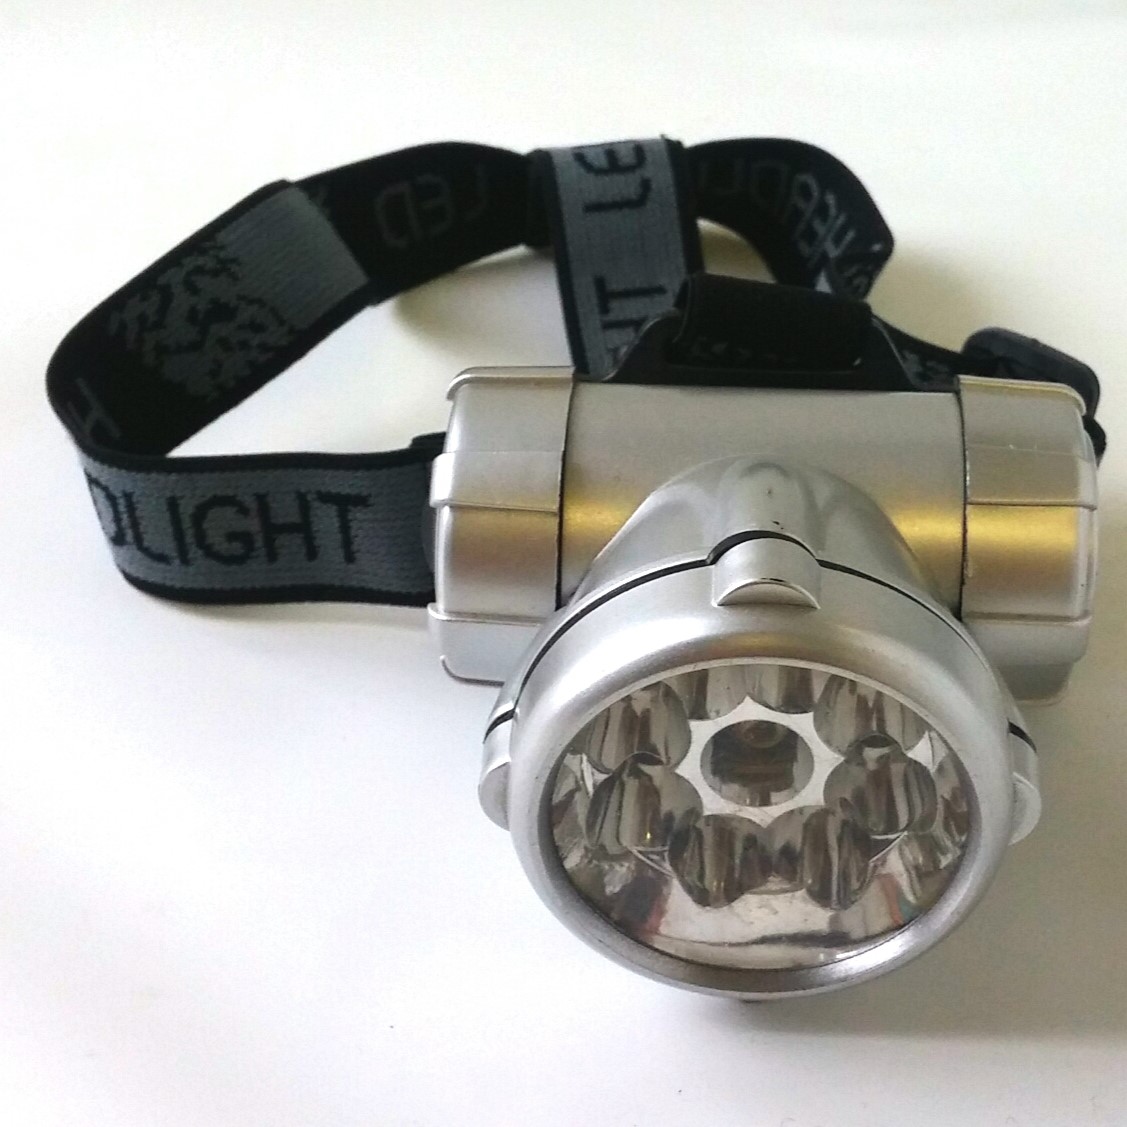 Headlight 8 leds + laser sight